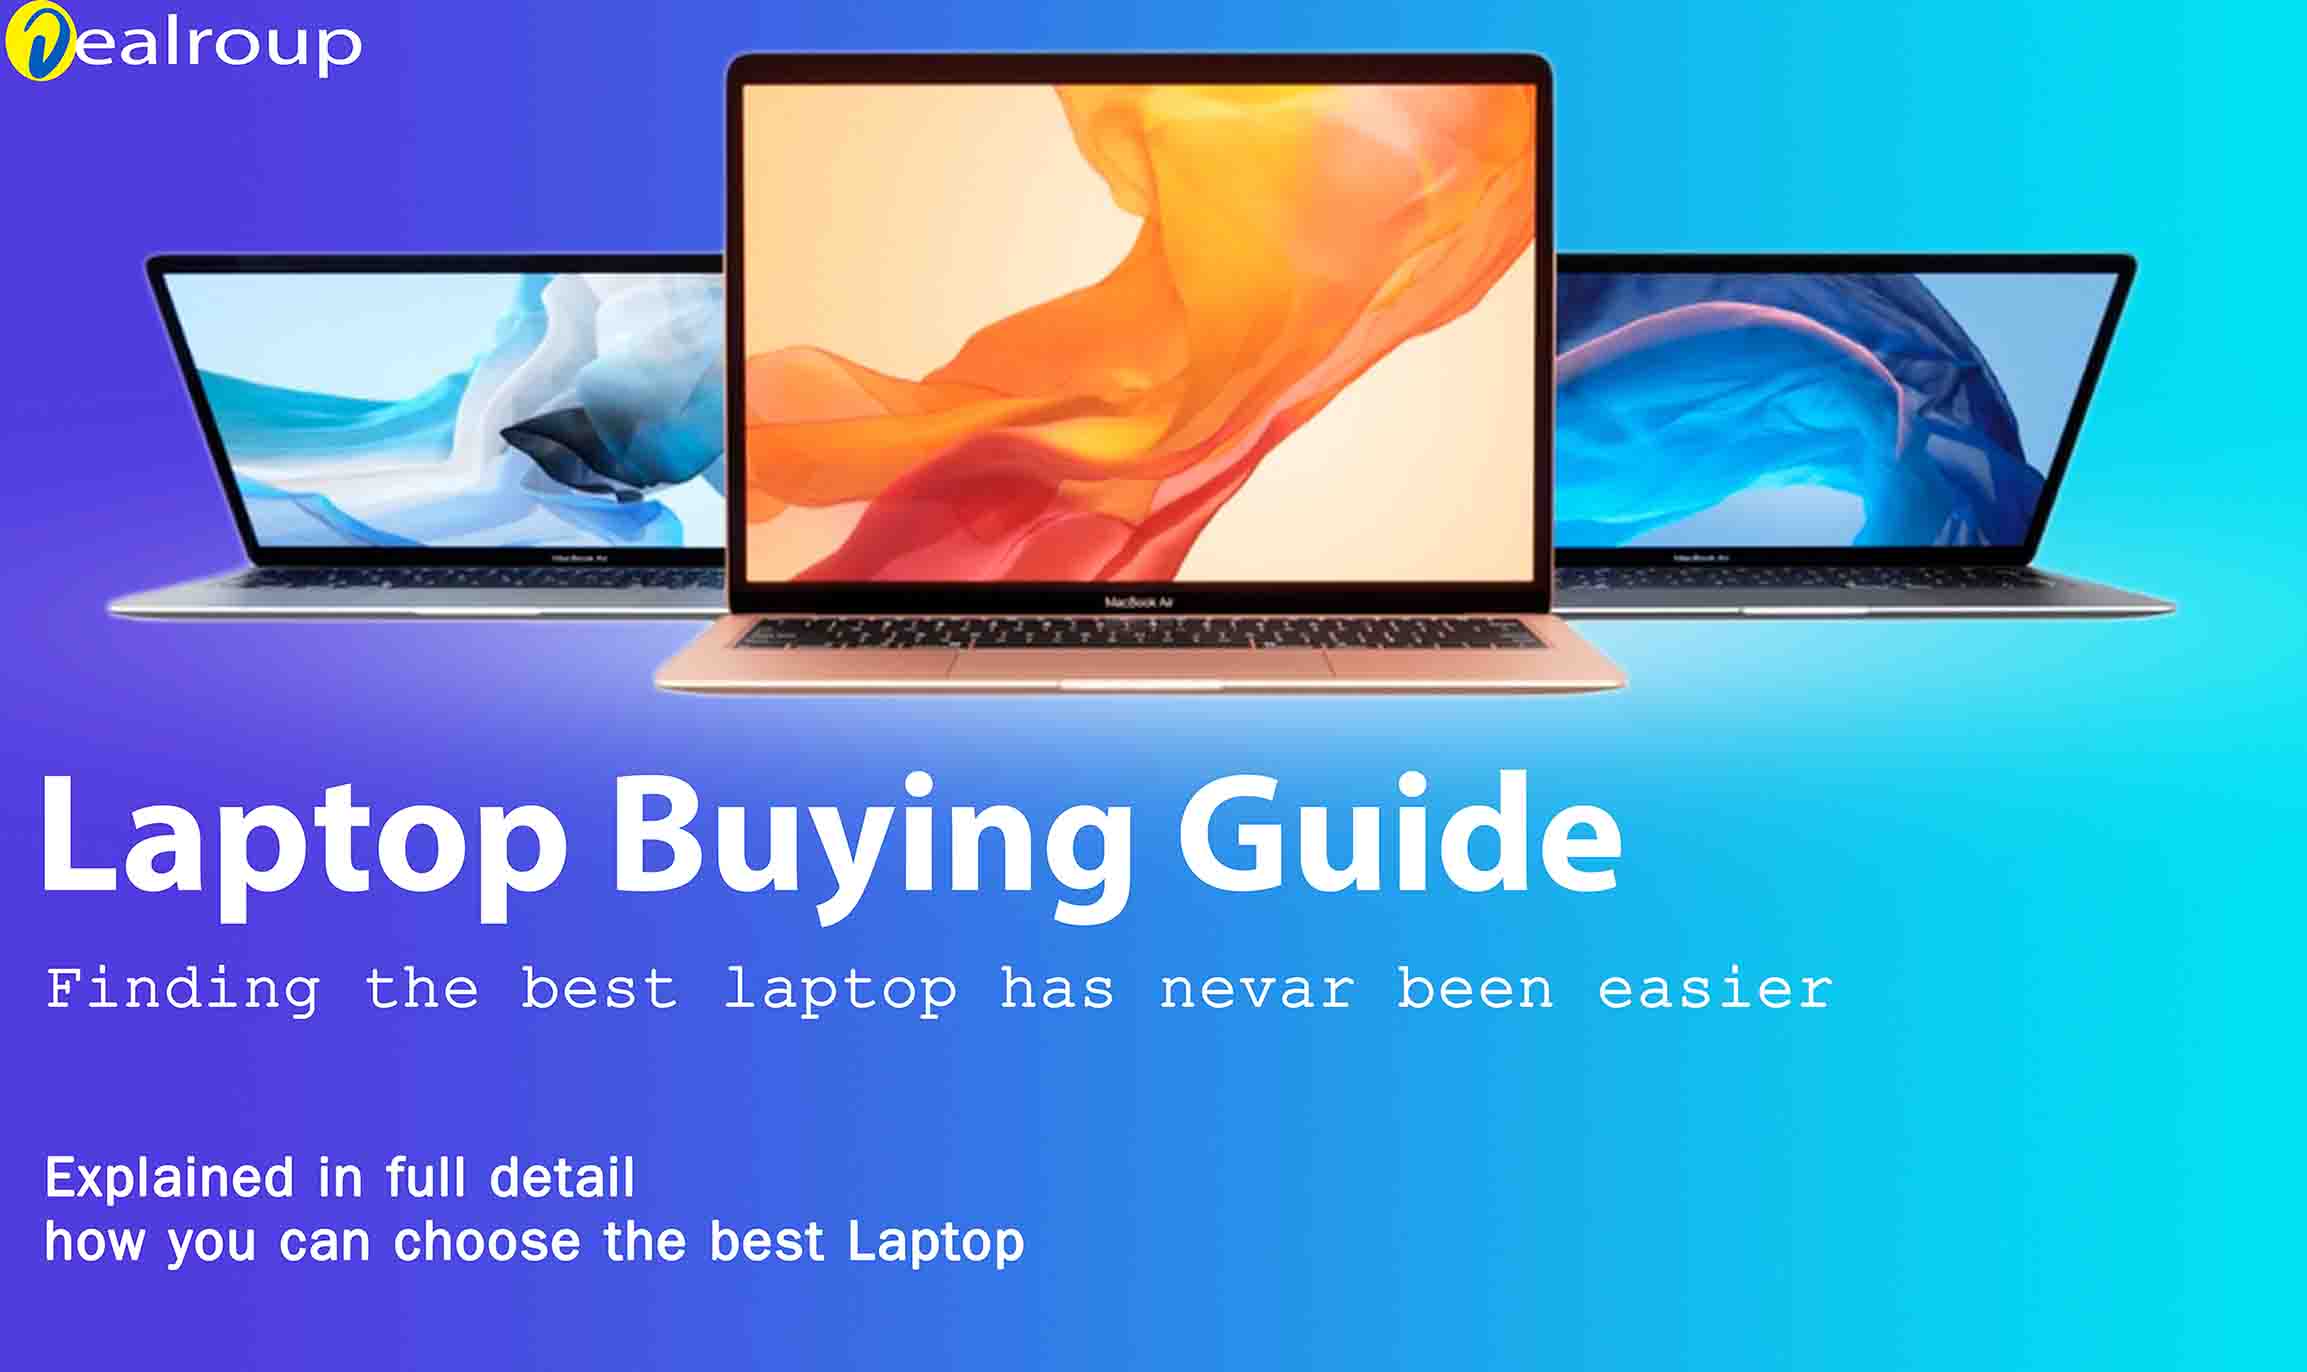 Buyer's guide to shopping laptops in Kenya